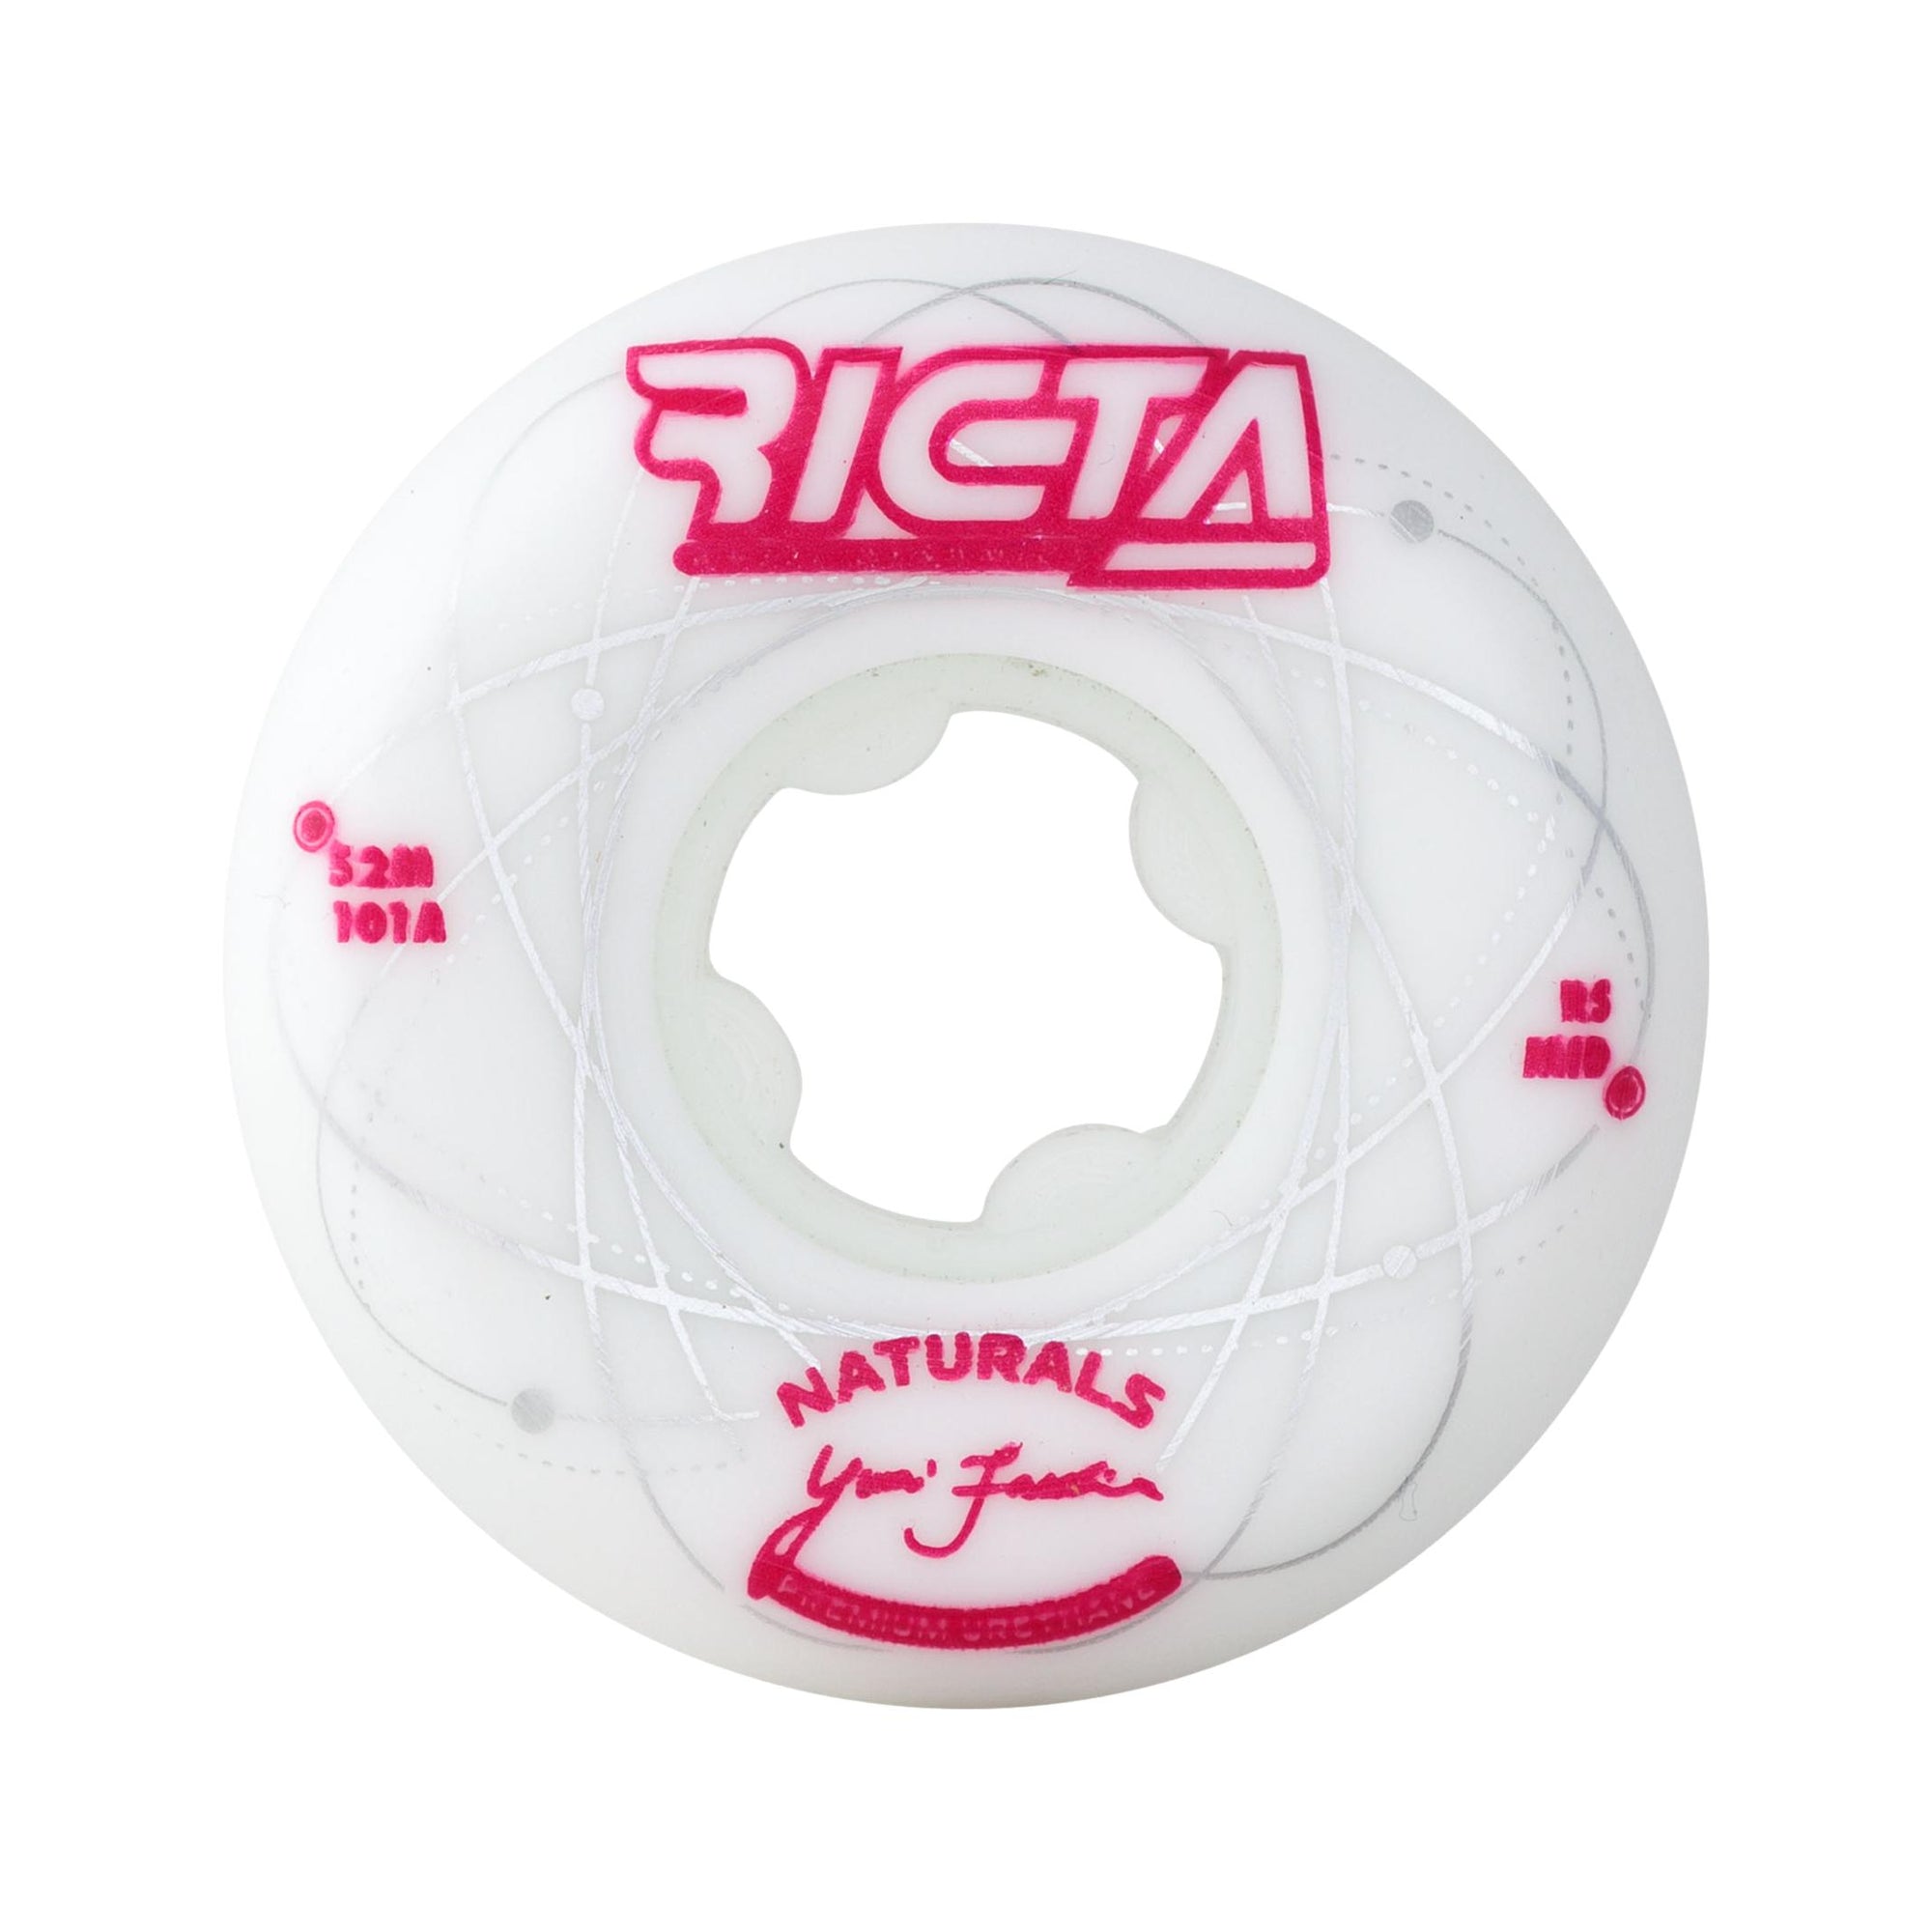 Ricta Facchini Orbital Naturals 52mm 101a White/Metallic Red Wheels - Venue Skateboards